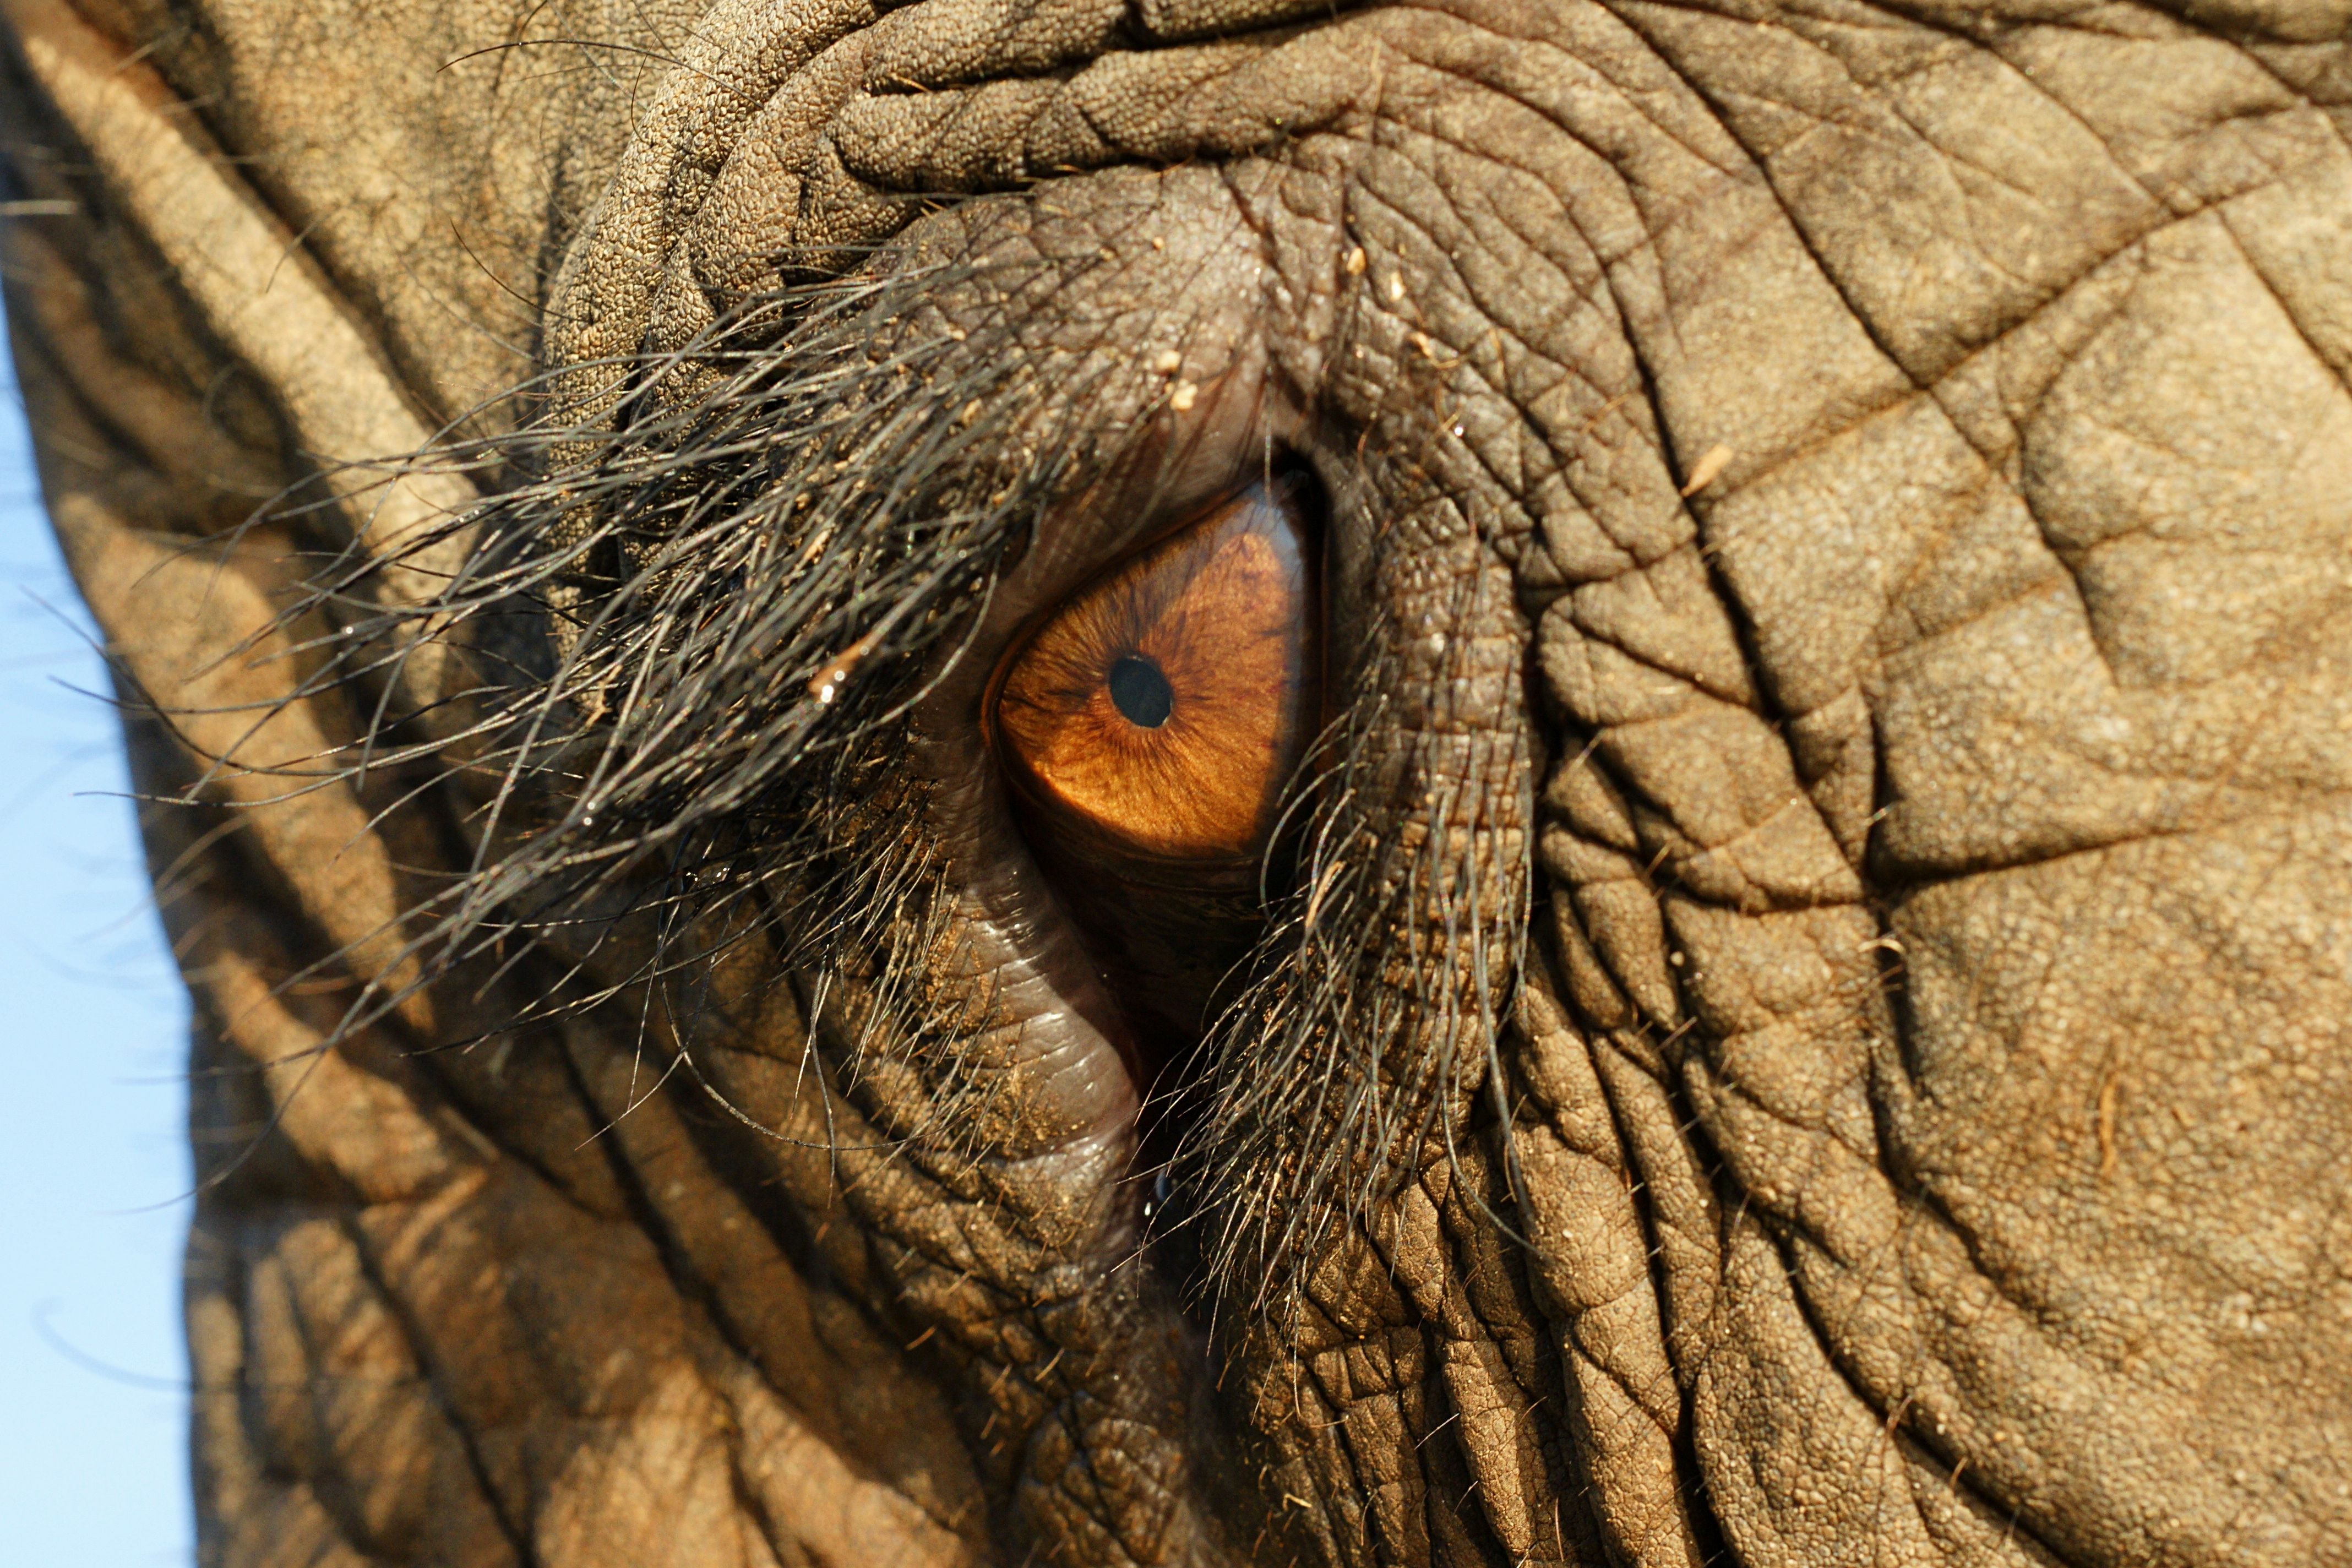 photo of elephant - Yahoo! Search Results theverinarian.com.au ...